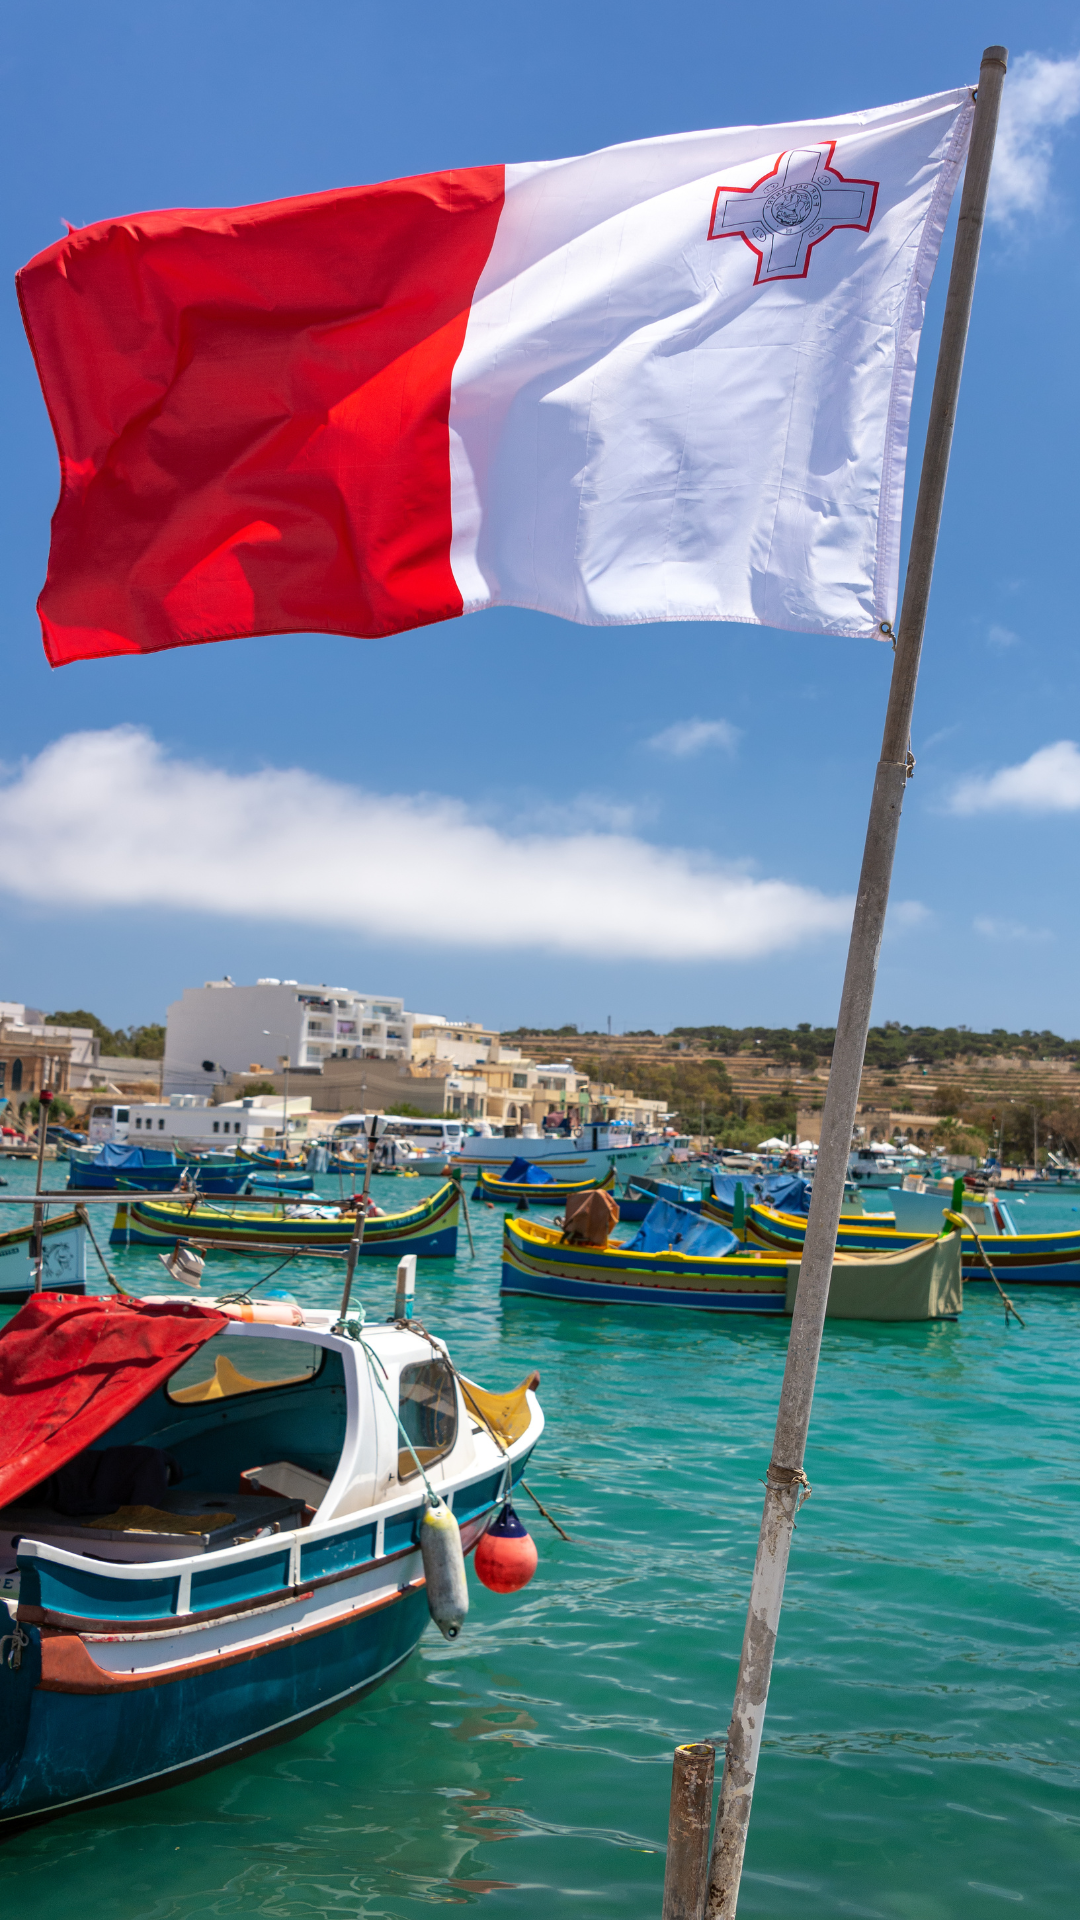 https://www.sprachcaffe.co.uk/fileadmin/Redaktion/images/Bilder_f%C3%BCr_Magazintexte/Malta_flag.png